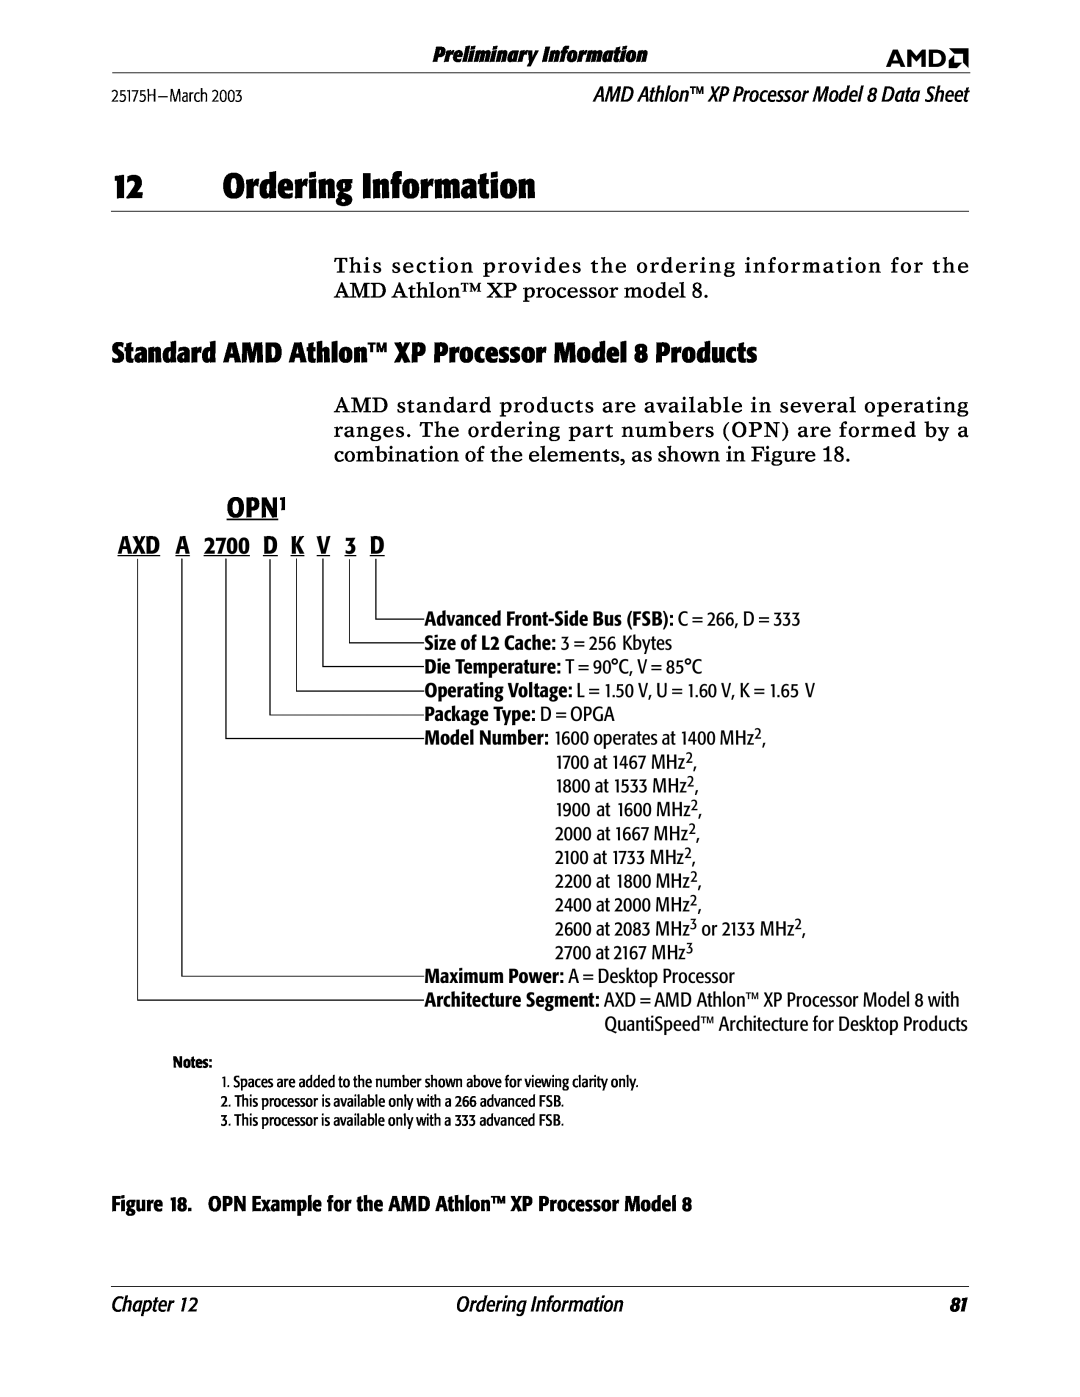 AMD manual Ordering Information, Standard AMD Athlon XP Processor Model 8 Products, OPN1, AXD A 2700 D K V 3 D, Chapter 